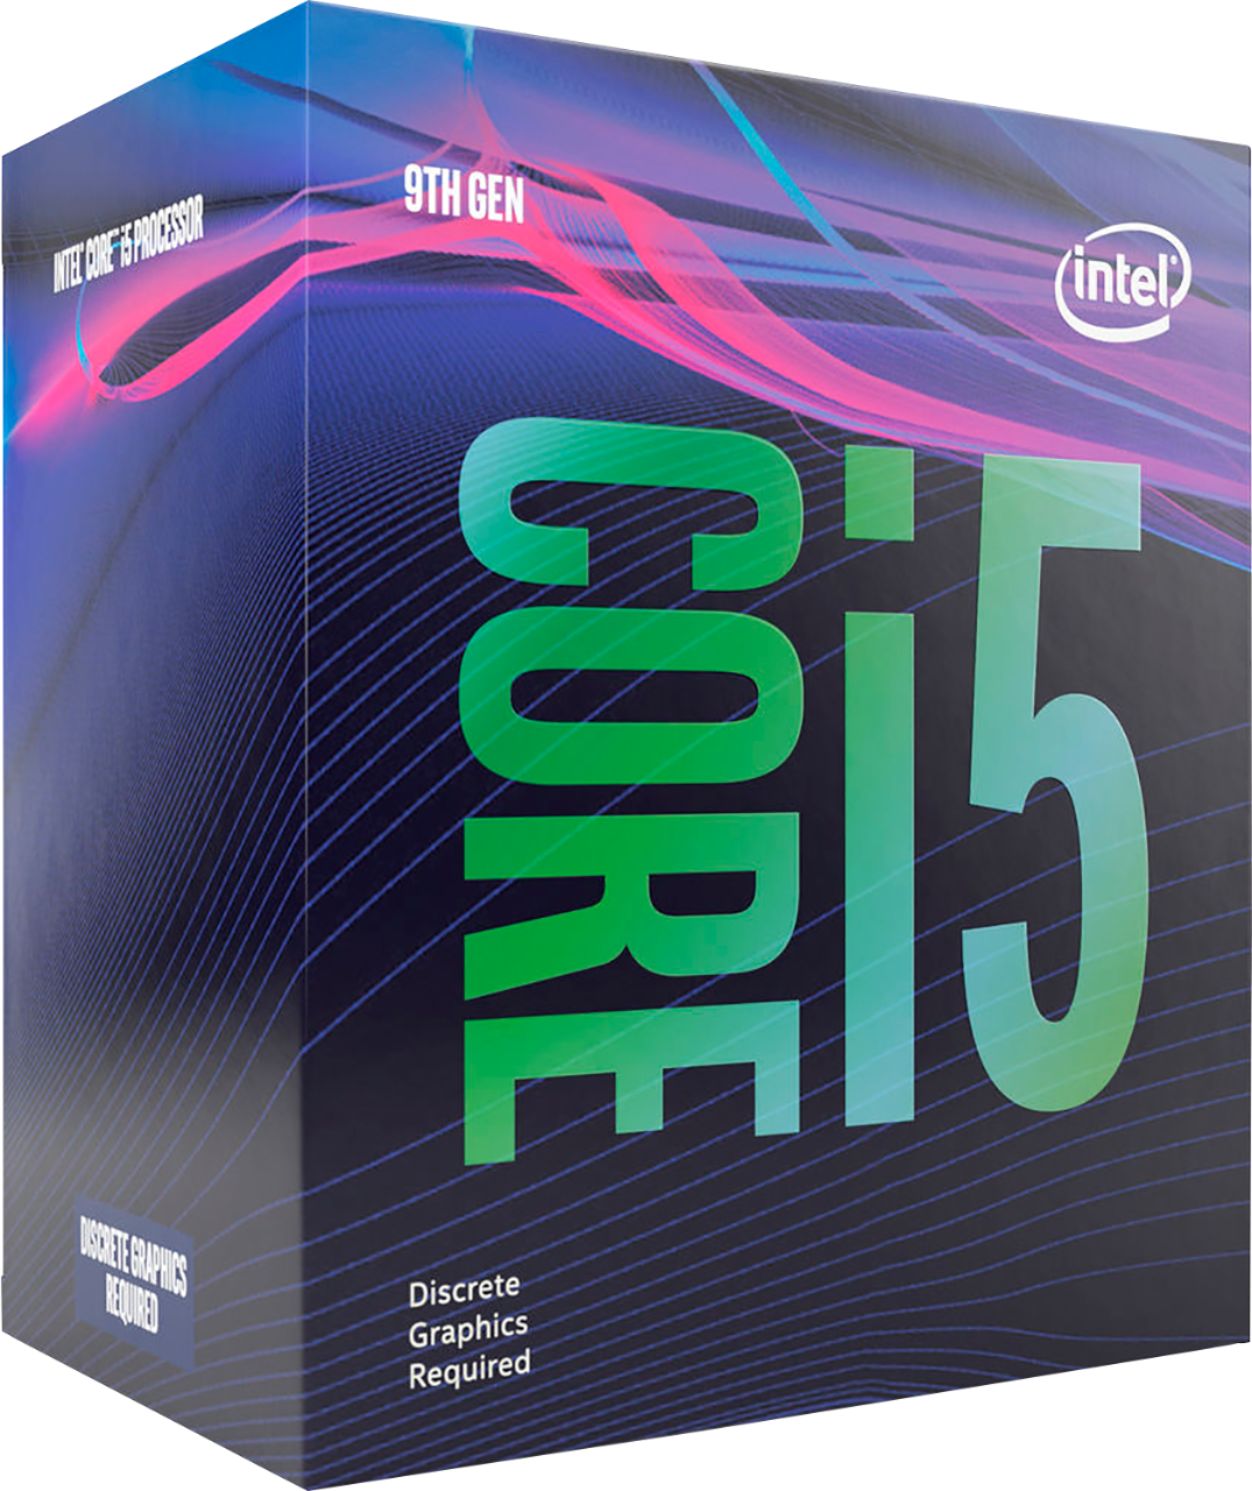 Intel Core i5-9400F 9th Generation 6-Core 6-Thread 2.9 - Best Buy